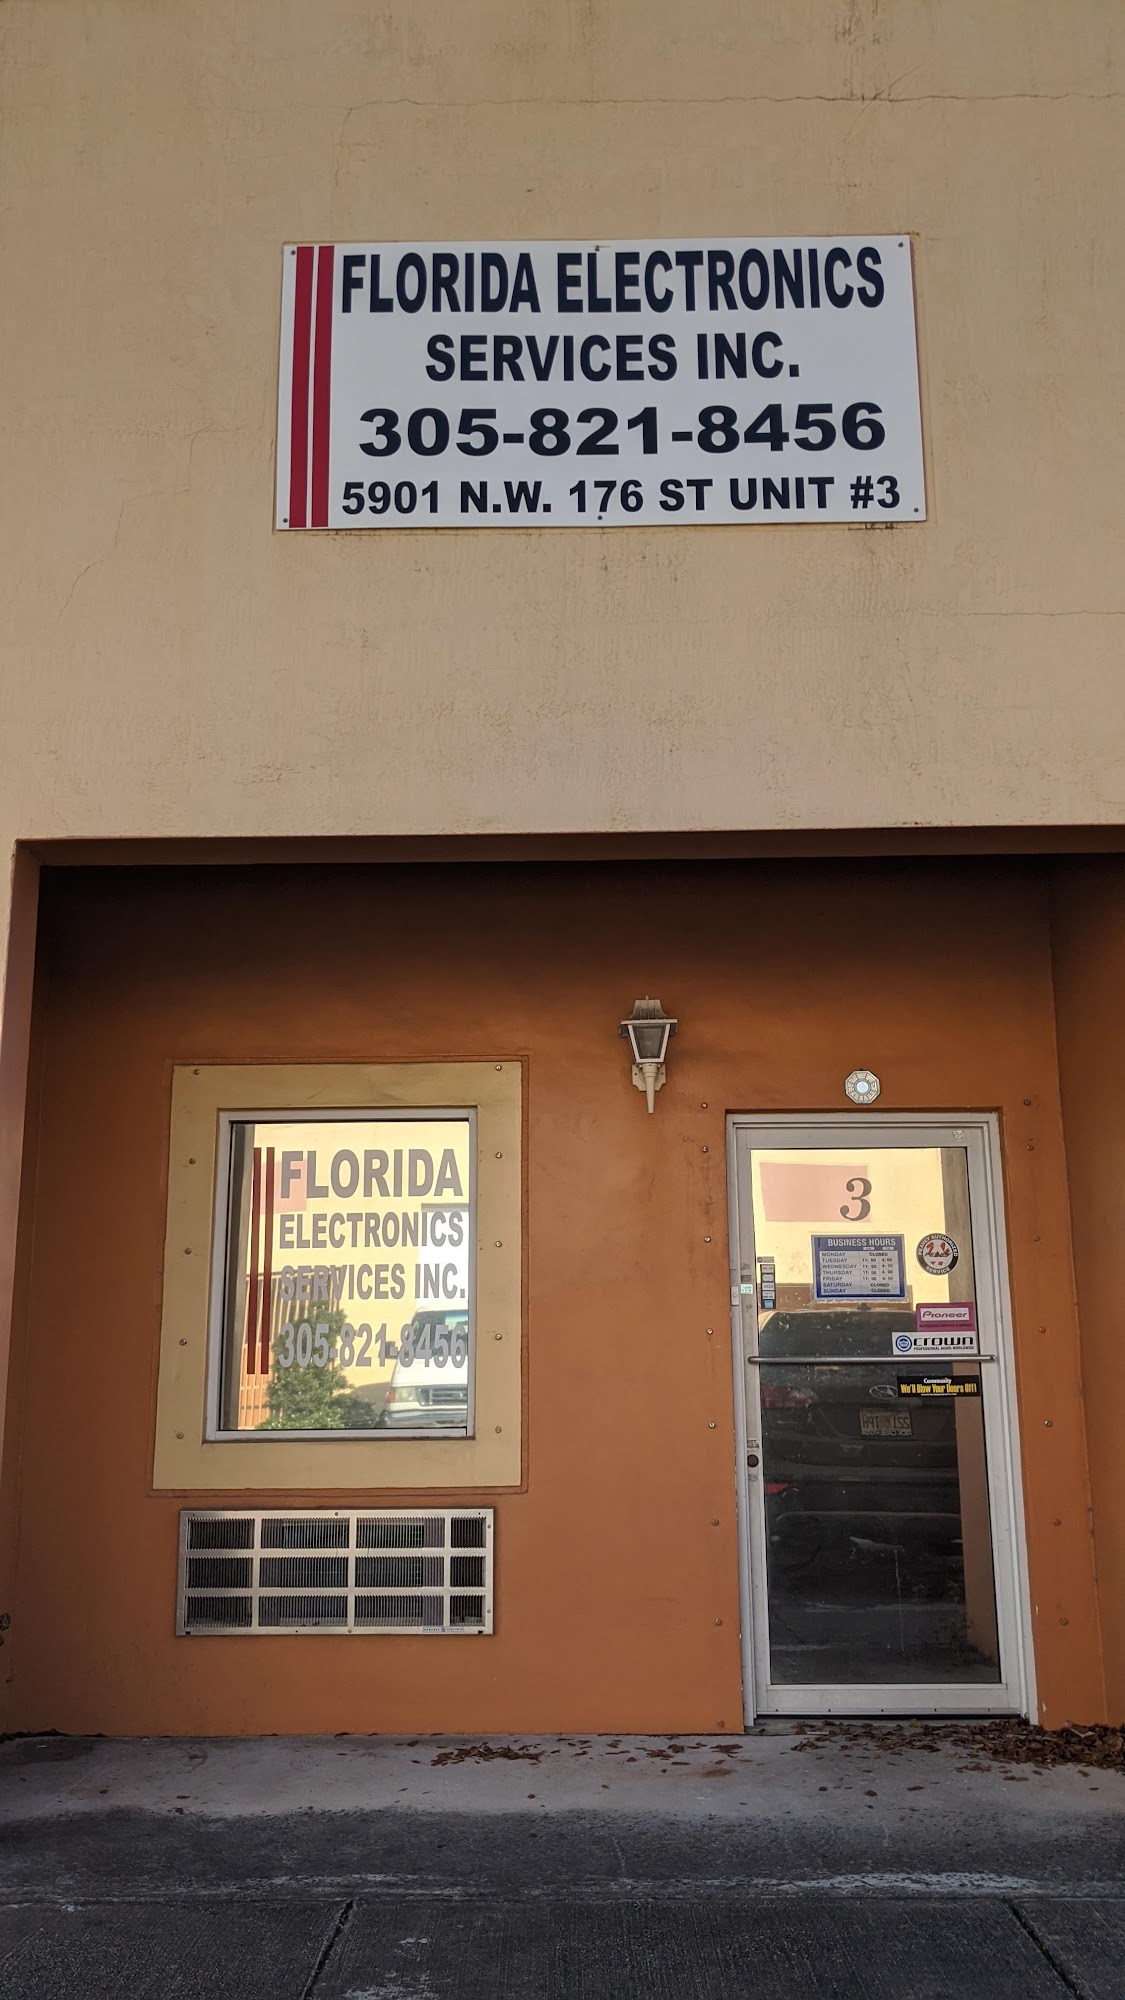 Florida Electronics Services Inc